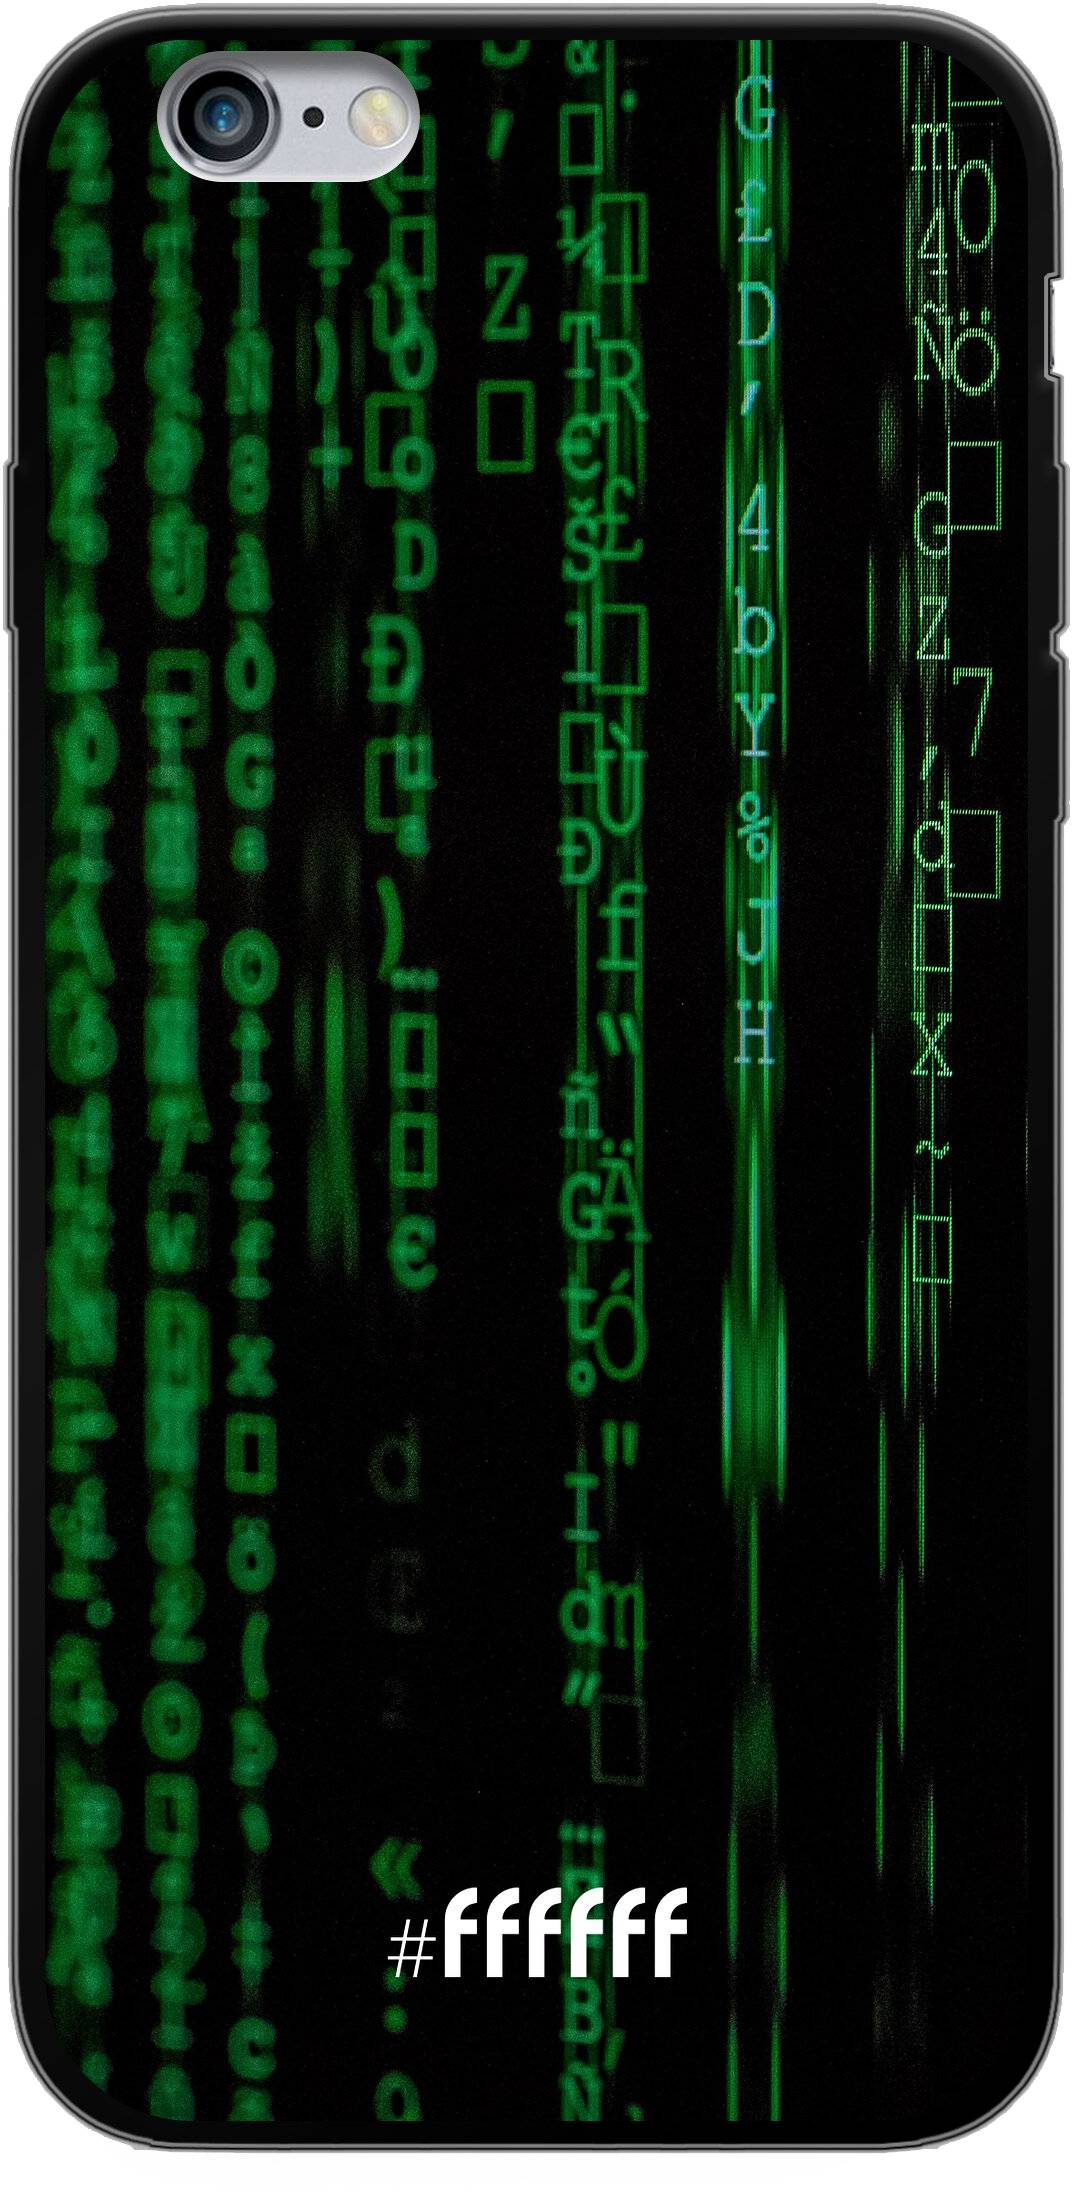 Hacking The Matrix iPhone 6s